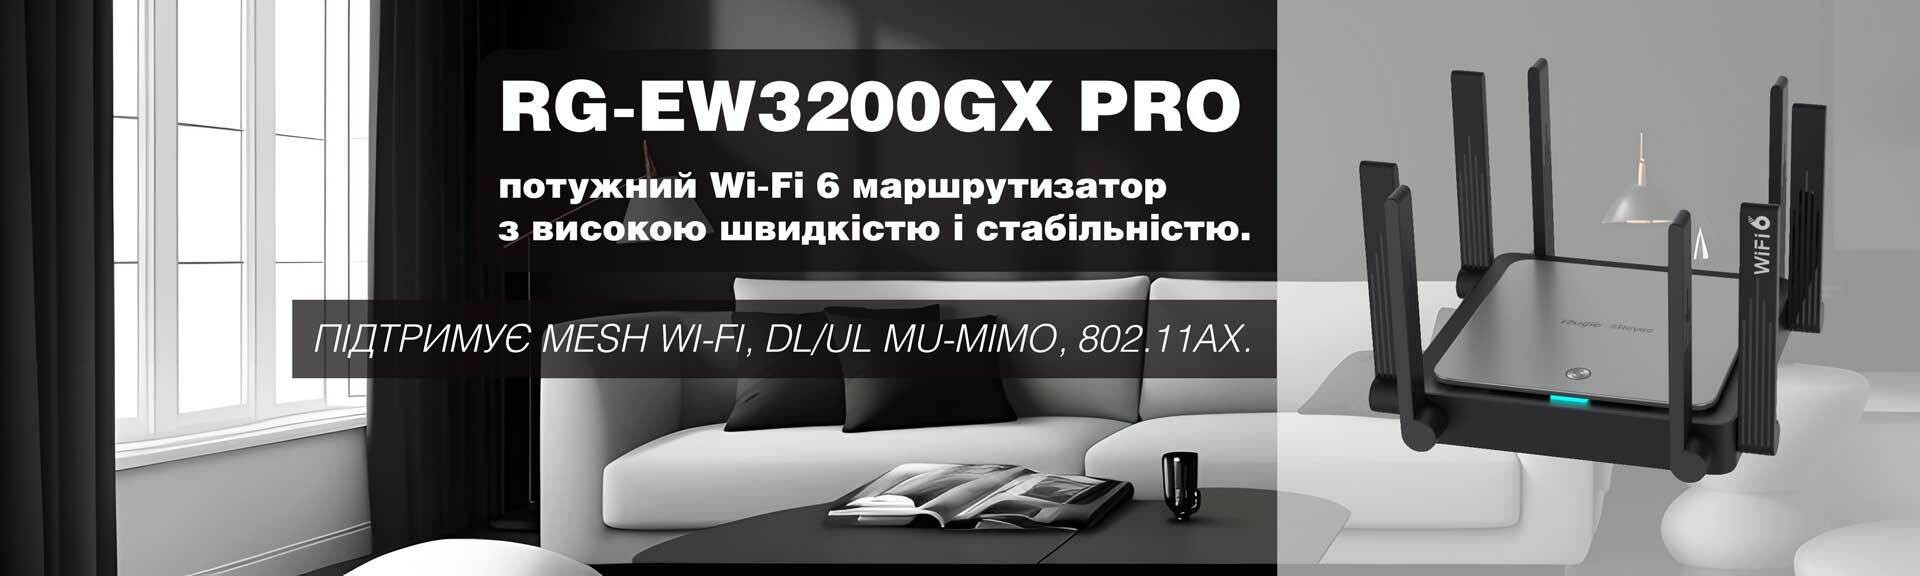 Беспроводной маршрутизатор Wi-Fi 6 Ruijie RG-EW3200GX PRO